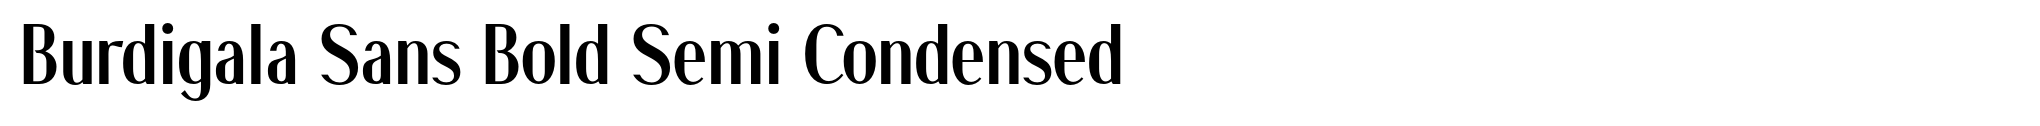 Burdigala Sans Bold Semi Condensed image